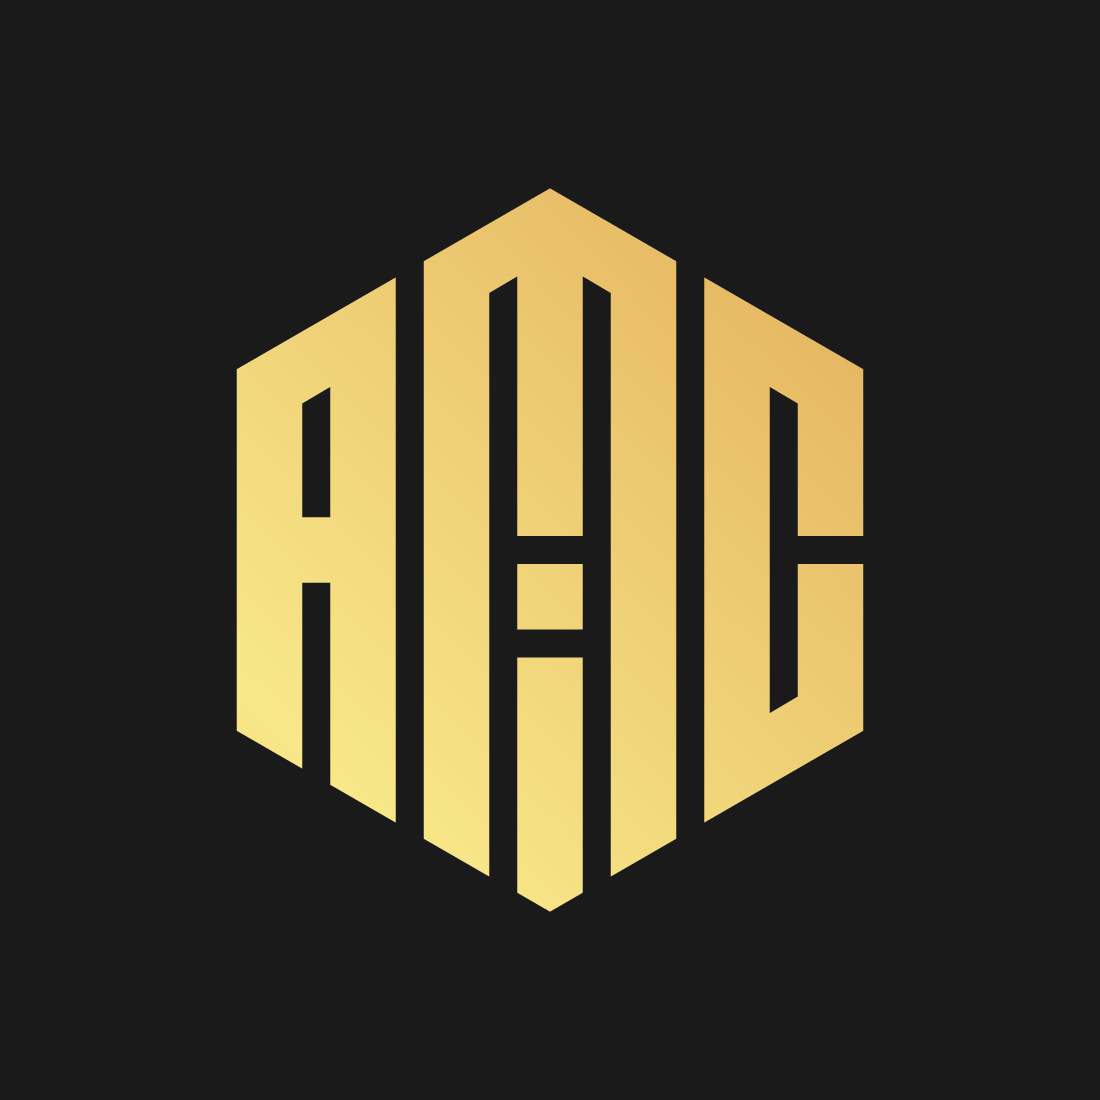 AMIC logo design preview image.